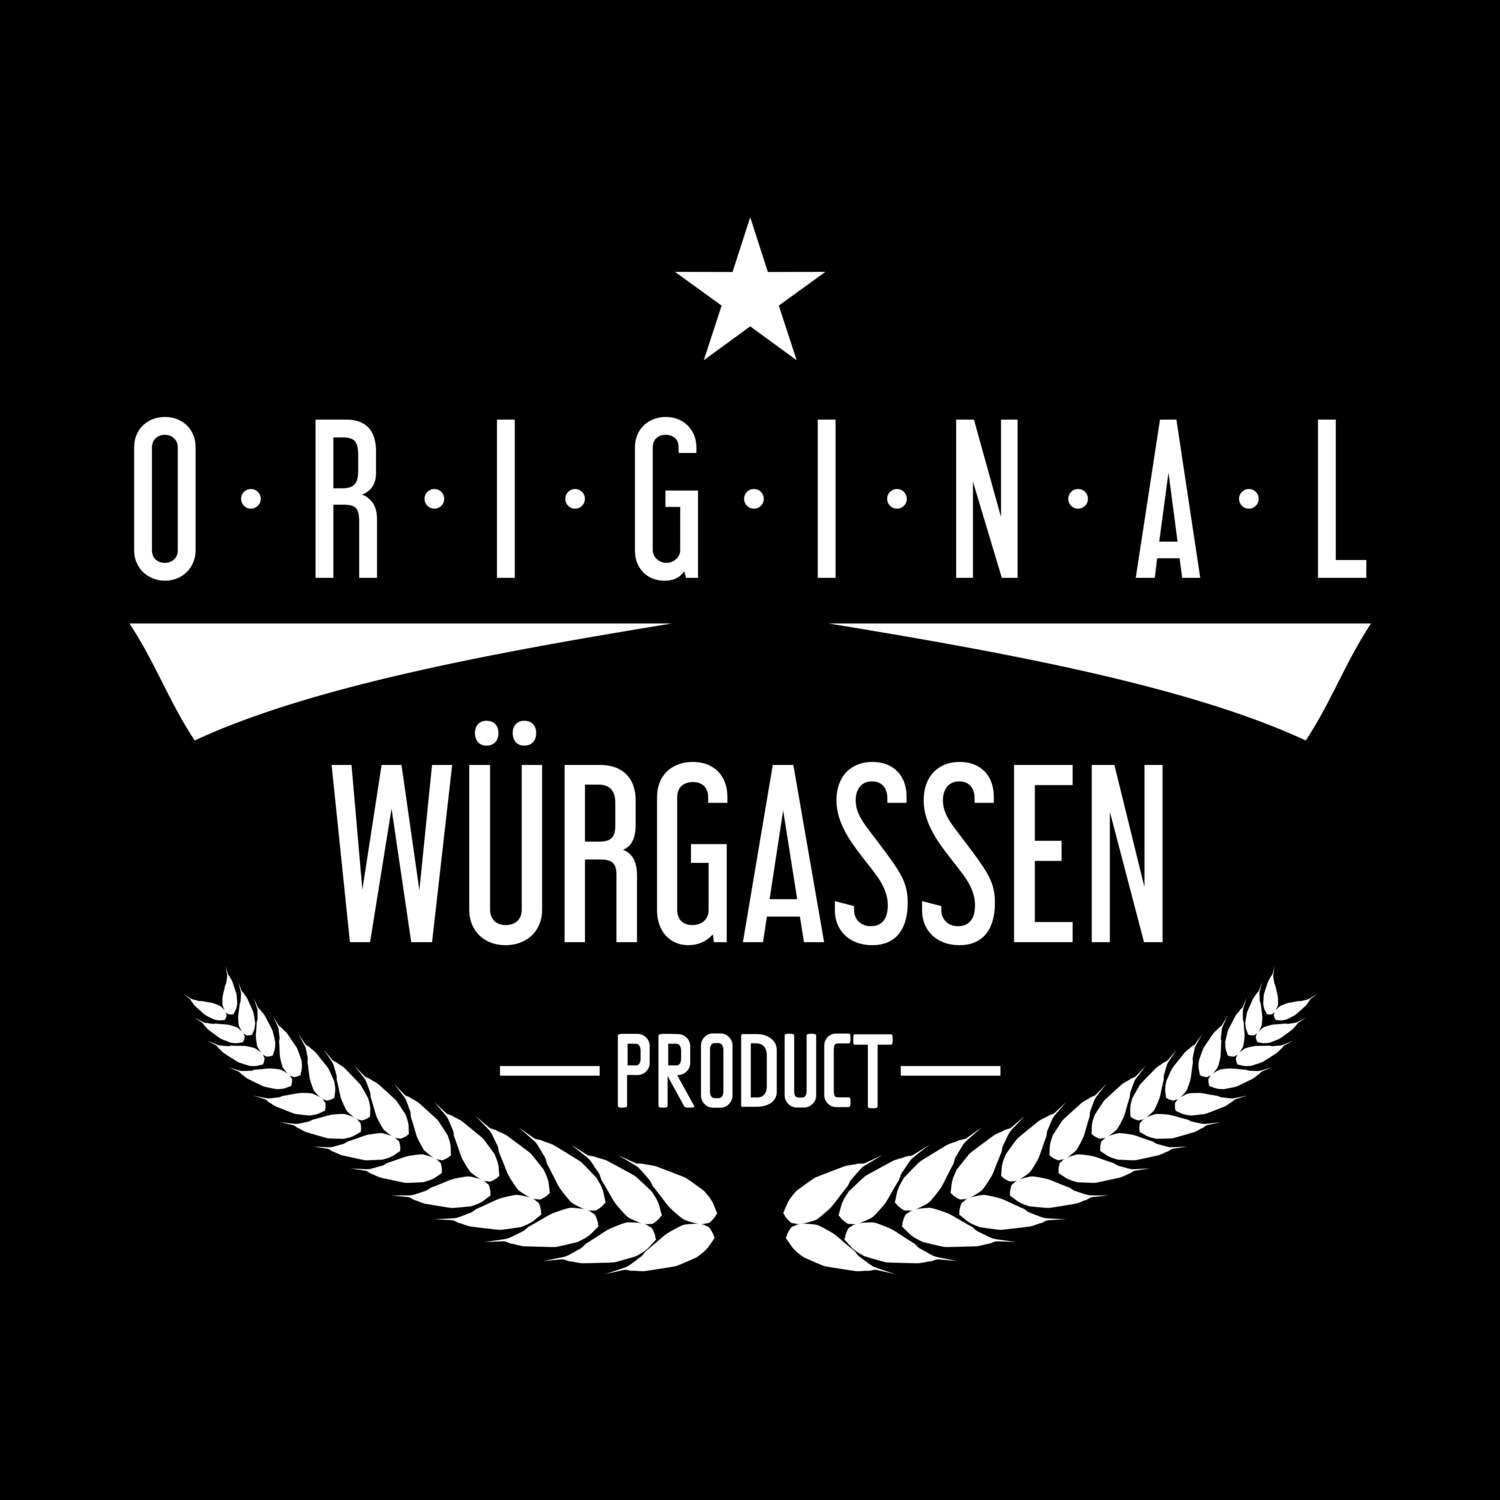 Würgassen T-Shirt »Original Product«